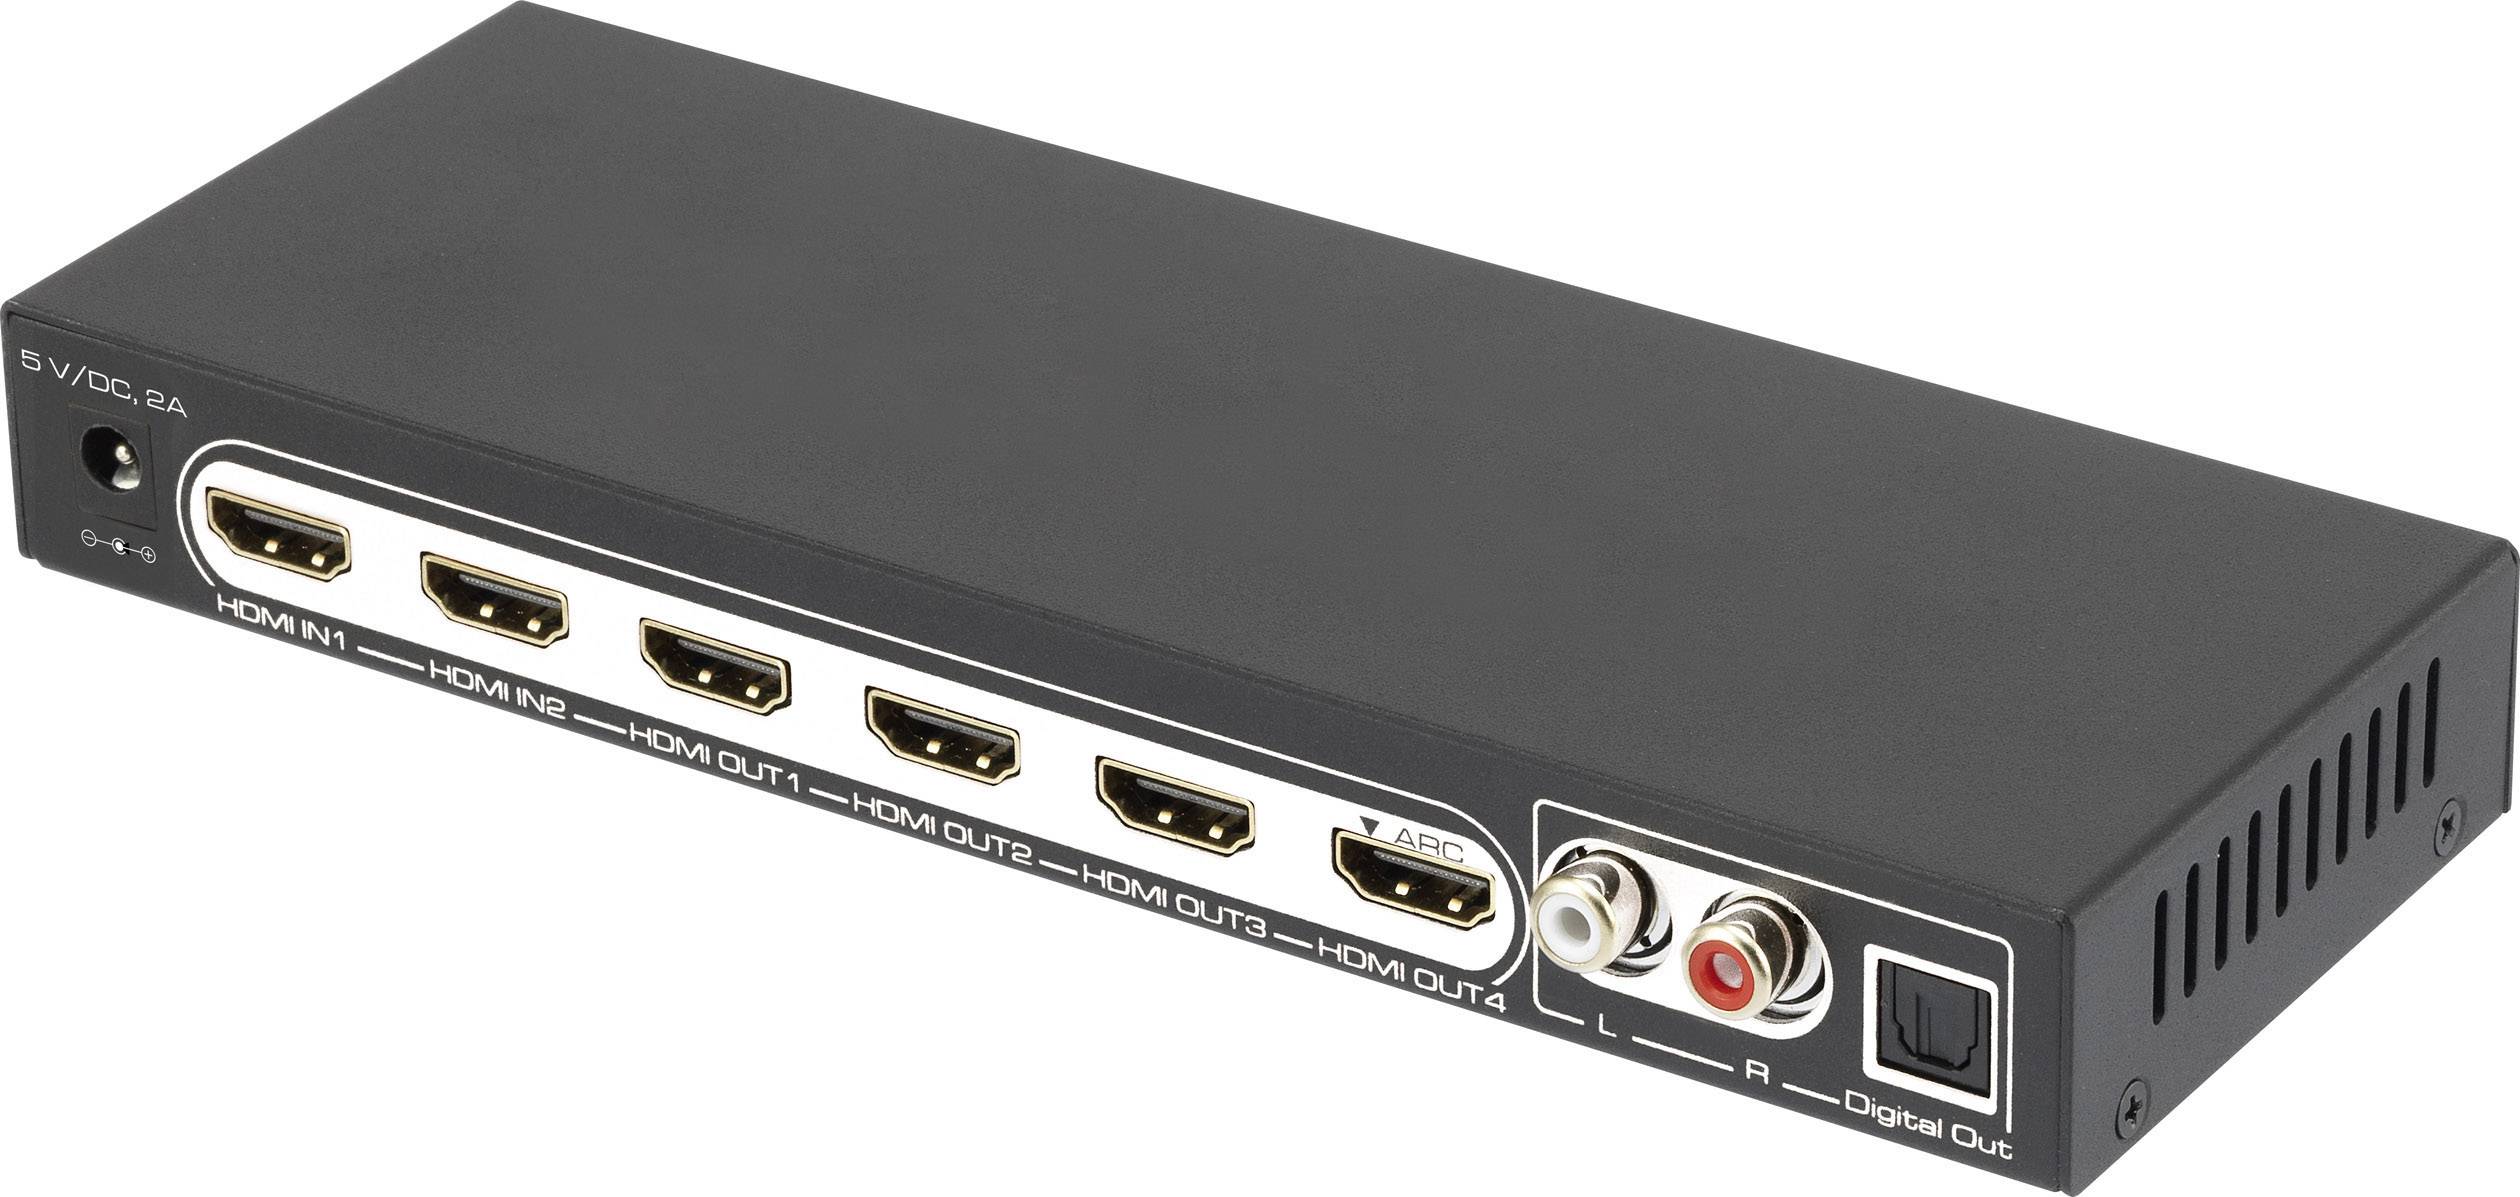 Botsing vreemd royalty SpeaKa Professional 4 ports HDMI splitter + audio ports, + remote control  3840 x 2160 p Black | Conrad.com